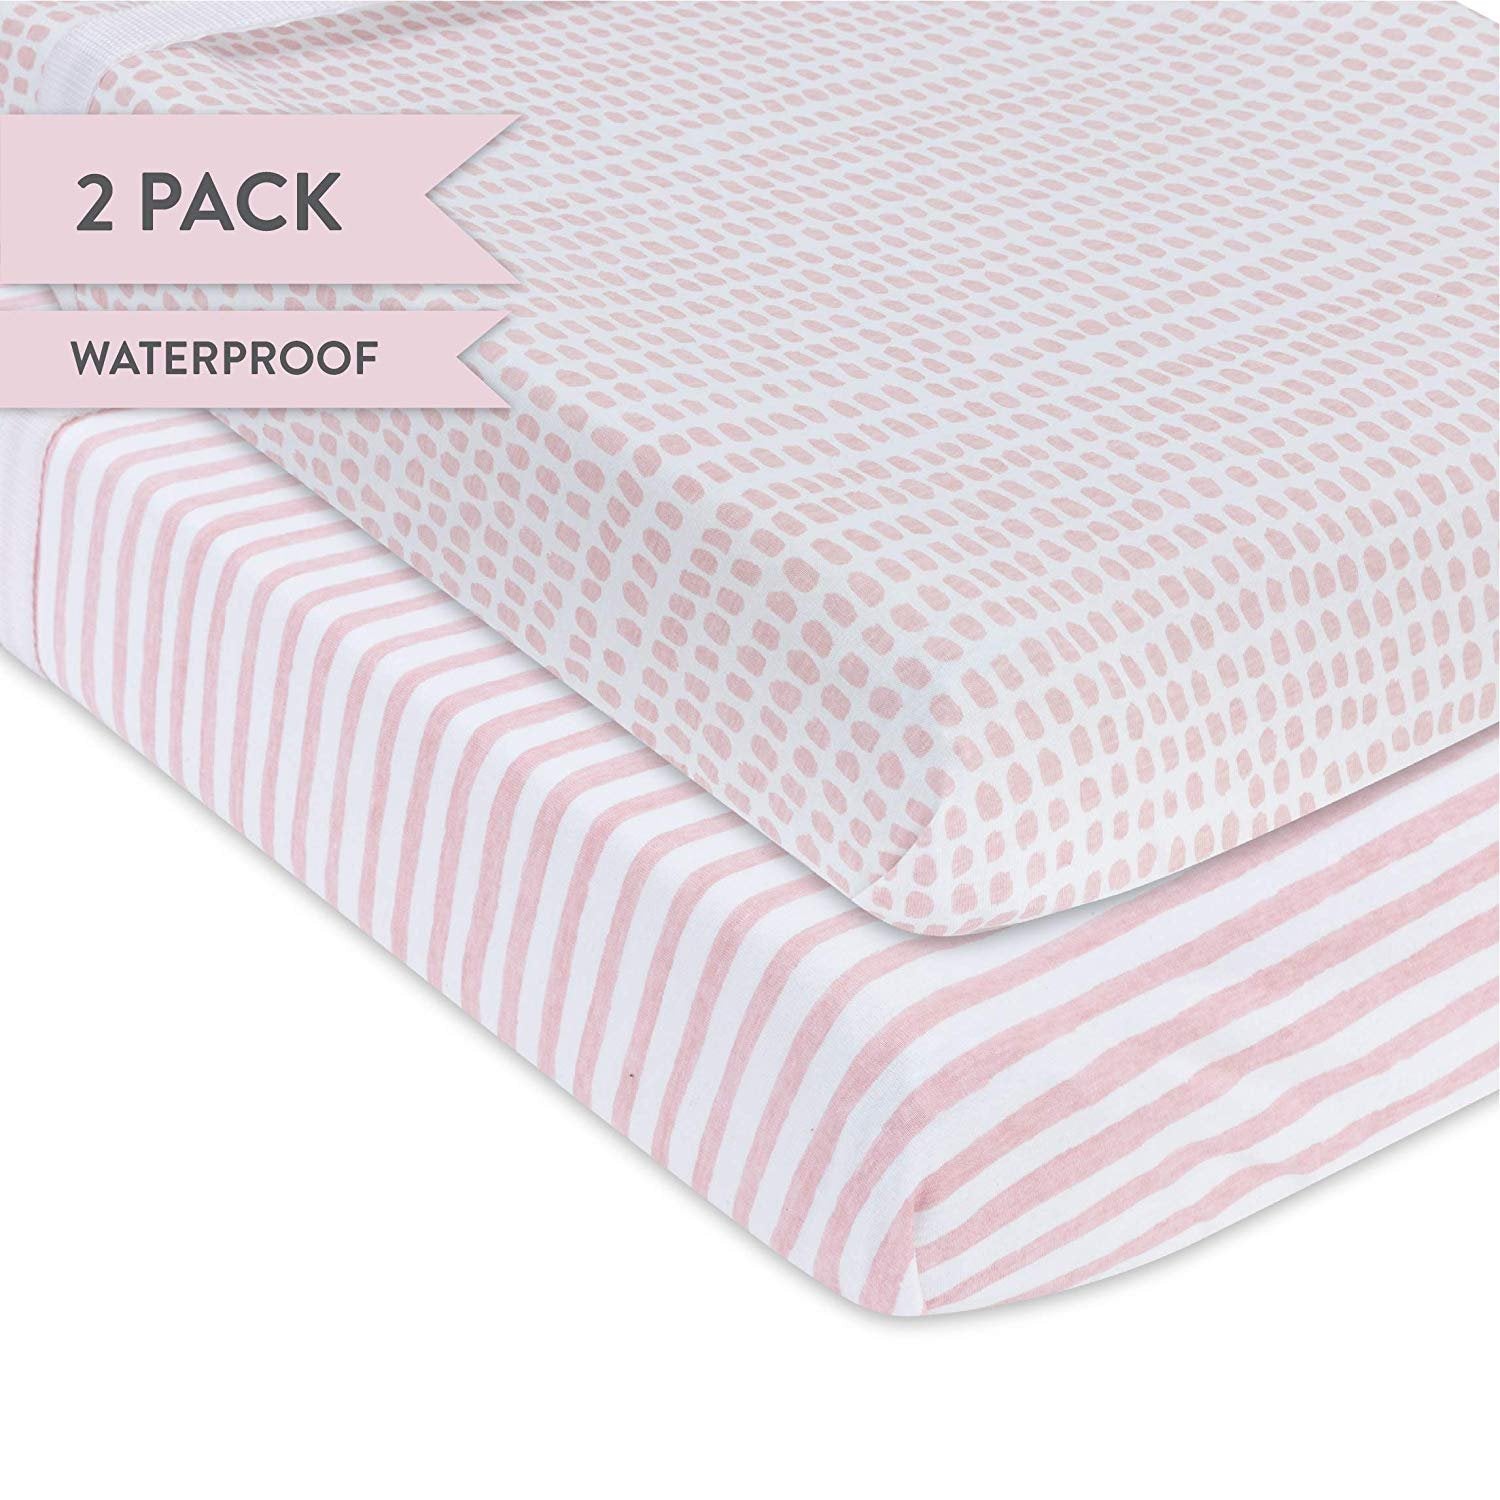 Waterproof Changing Pad Cover | Cradle Sheet Set